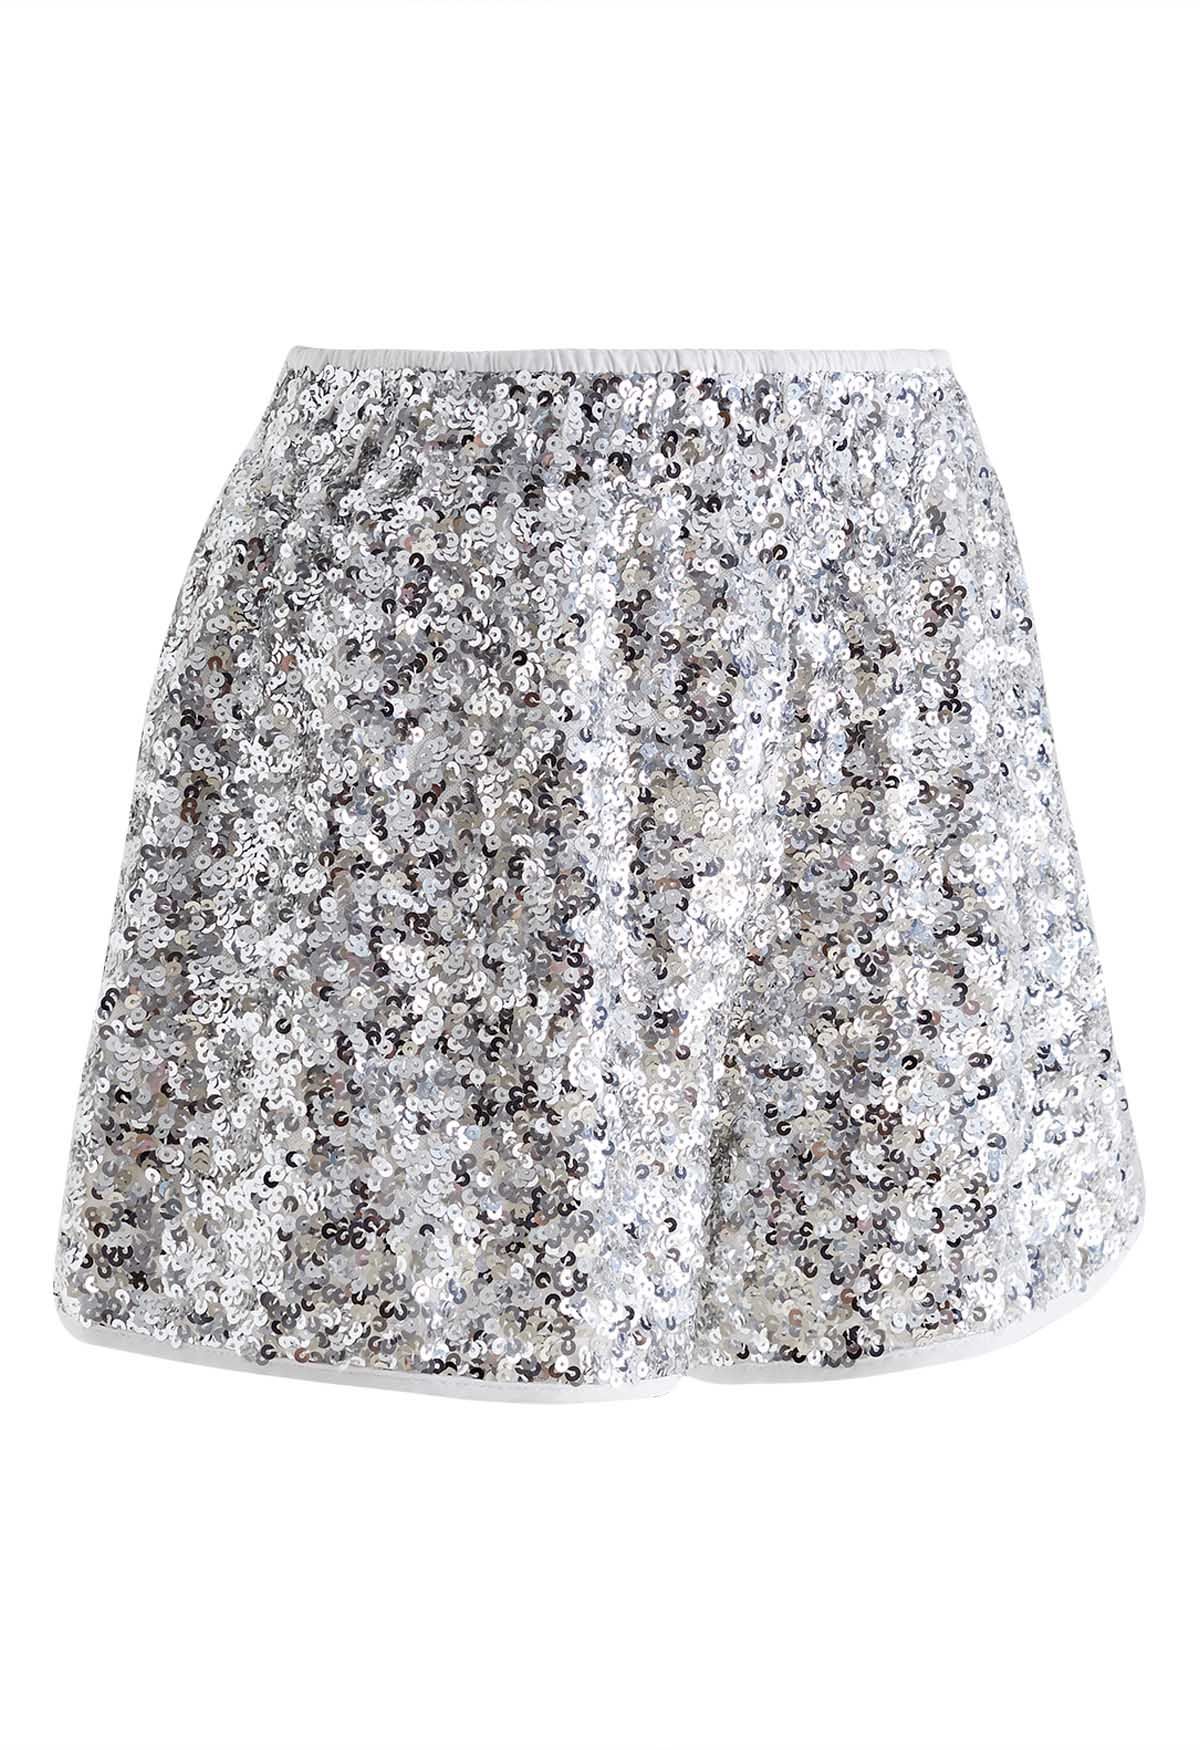 Full Sequins Embellished Shorts in Silver